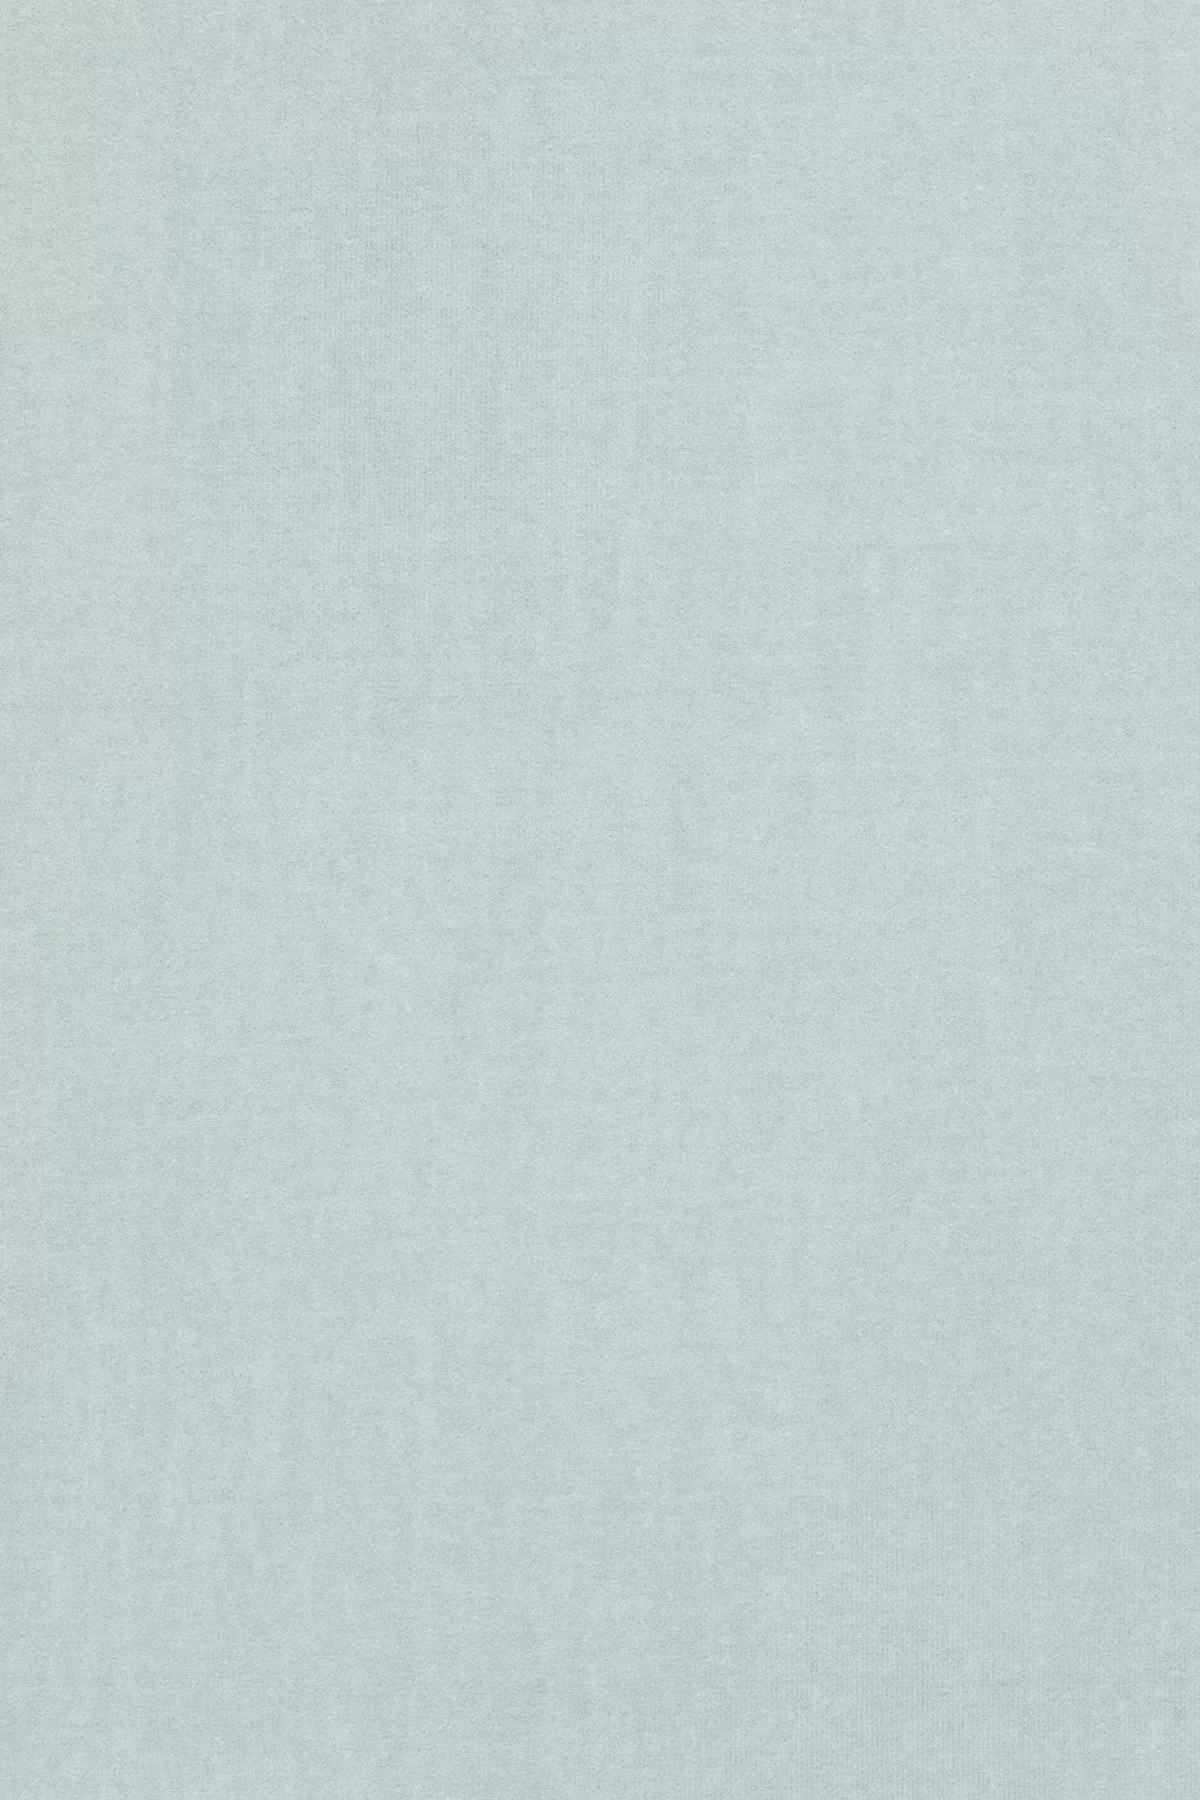 Fabric sample Harald 3 823 grey